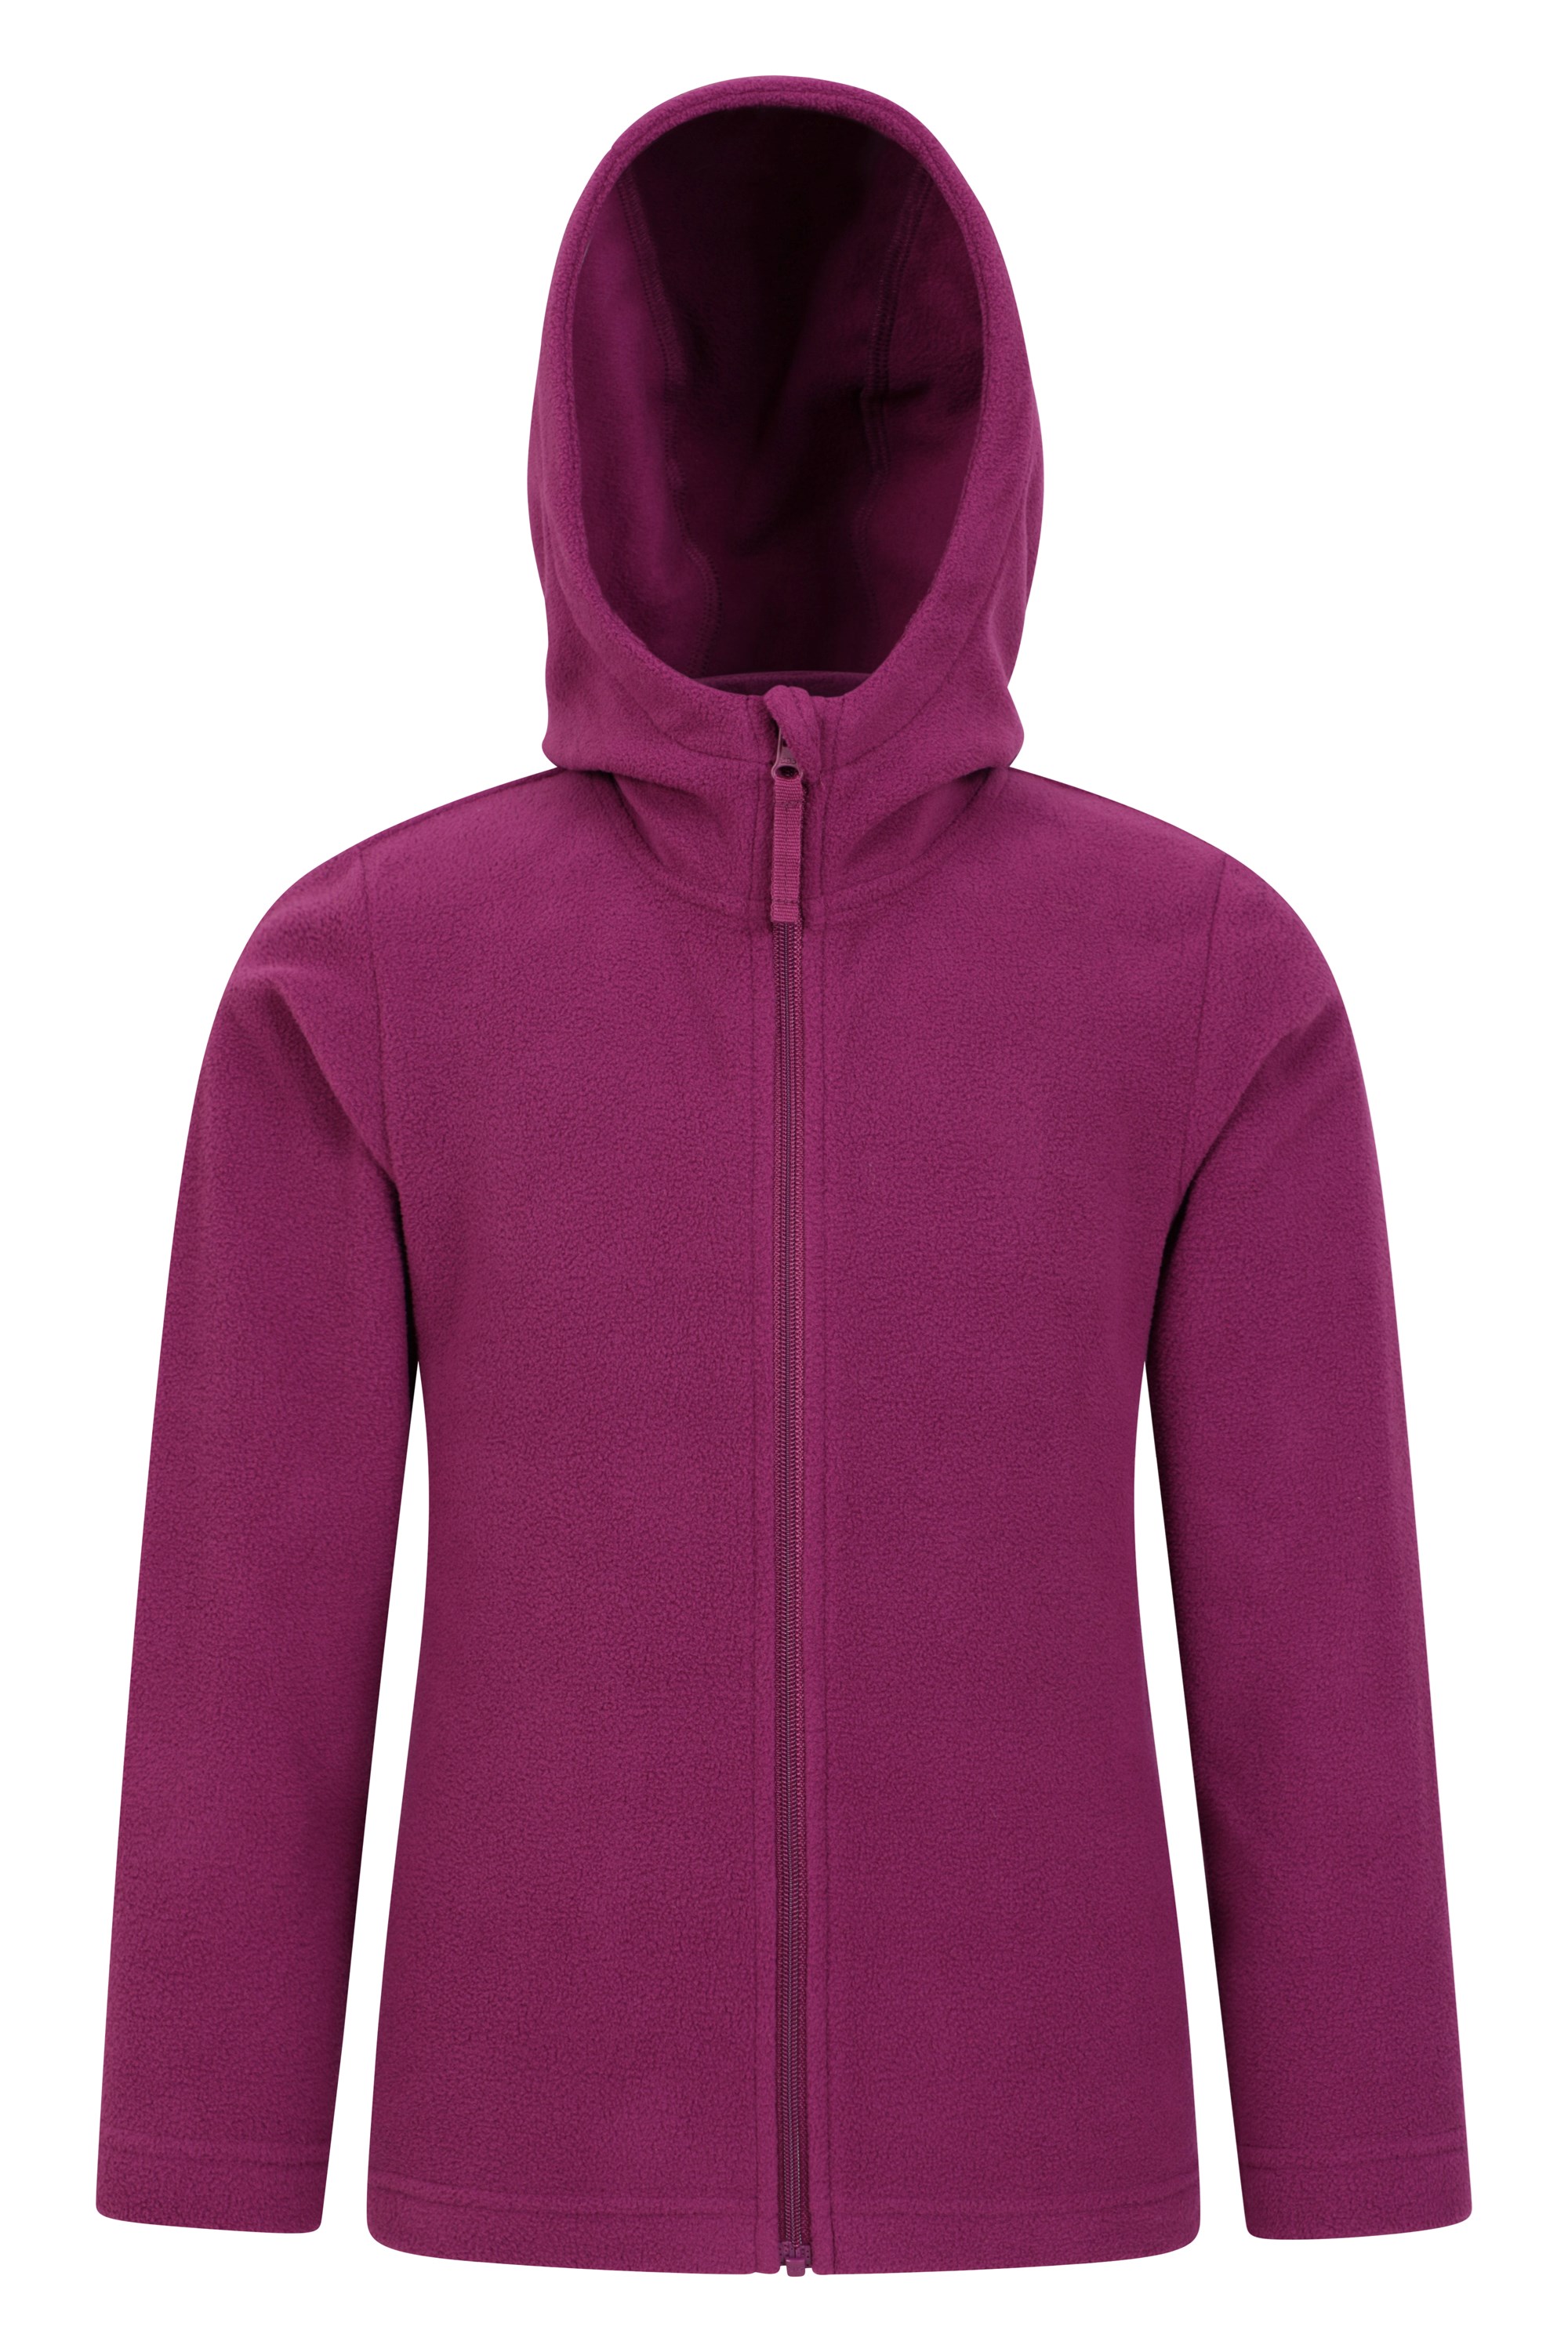 Zipper Jacket Warm Coat Fleece Fabric Wind Proof Hoodie for Children Boys Girls  Sweatshirt Sale - China Hoodies and Hoodie price